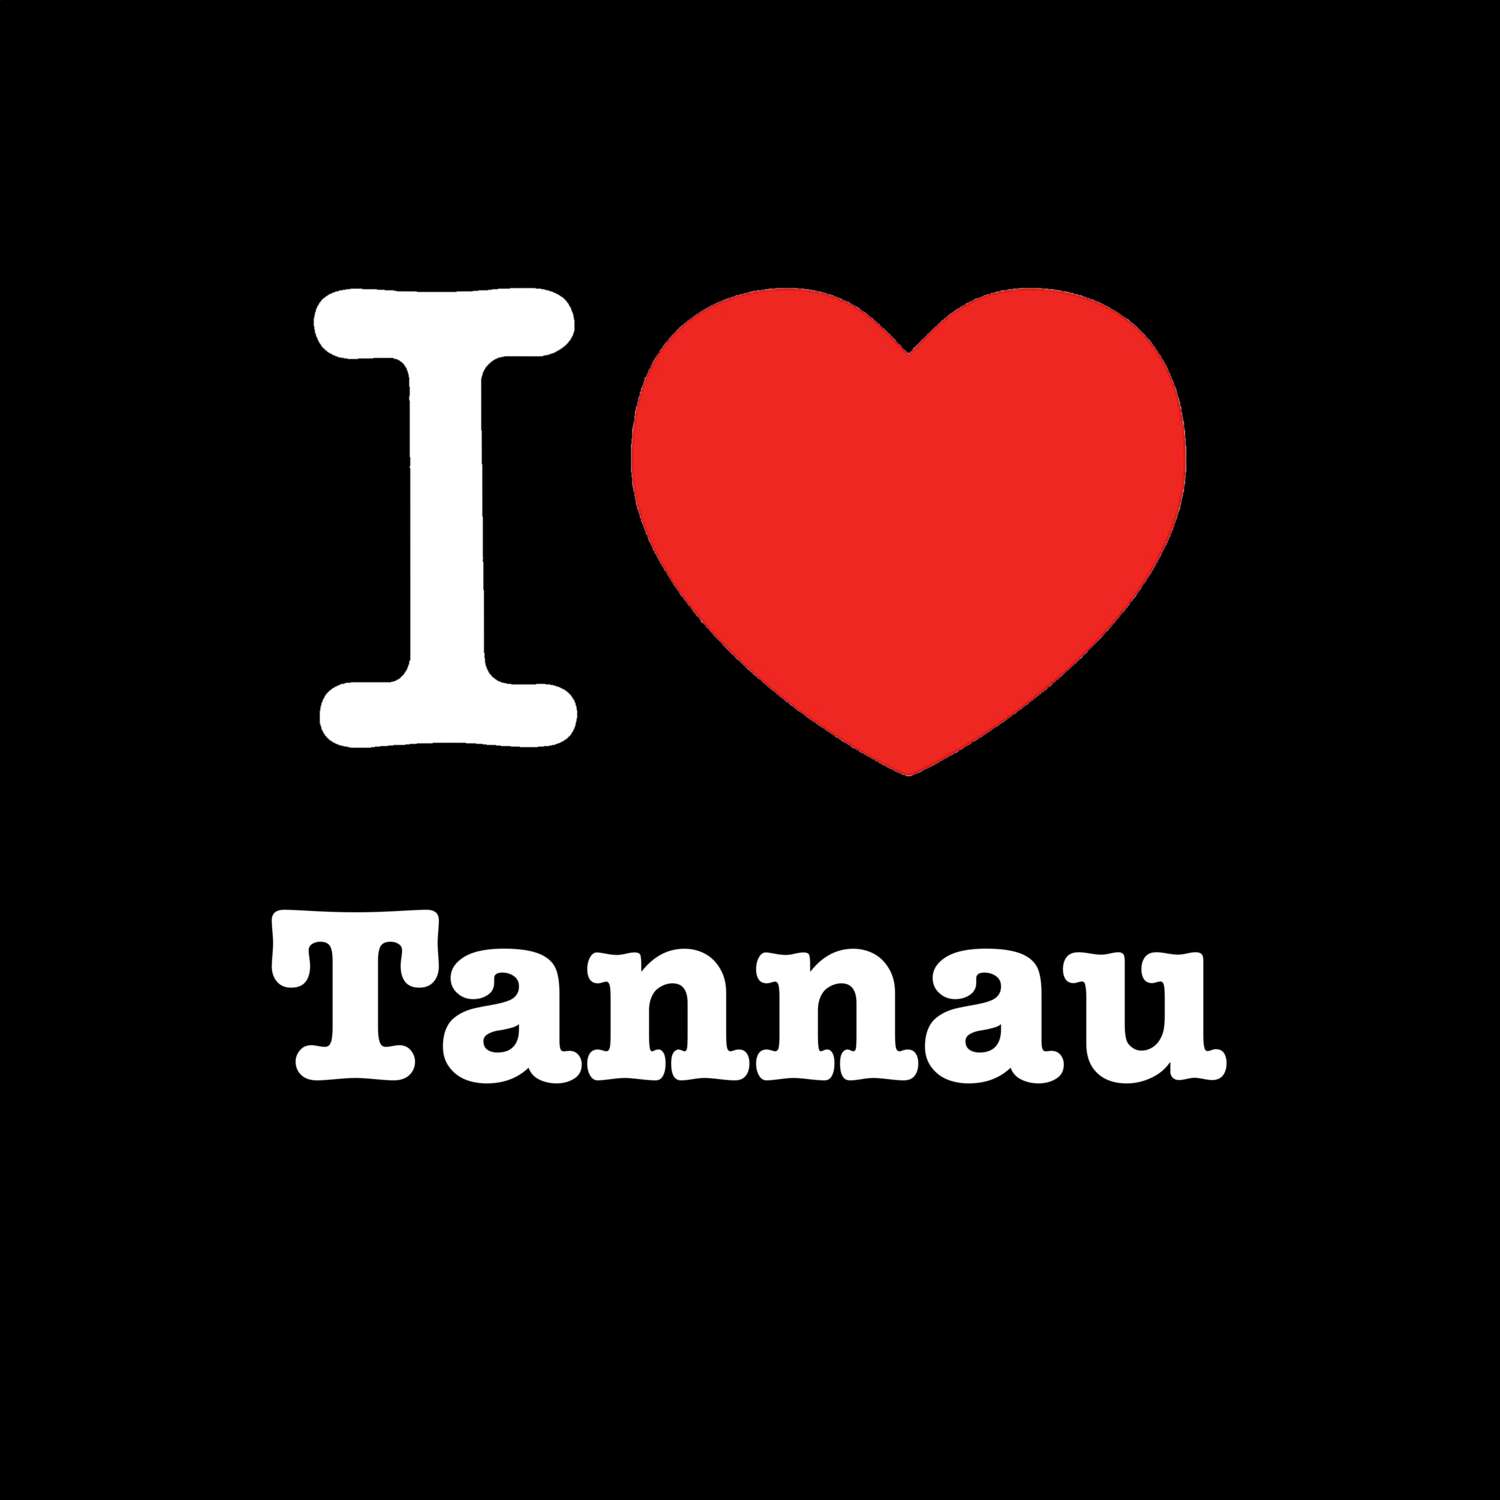 Tannau T-Shirt »I love«